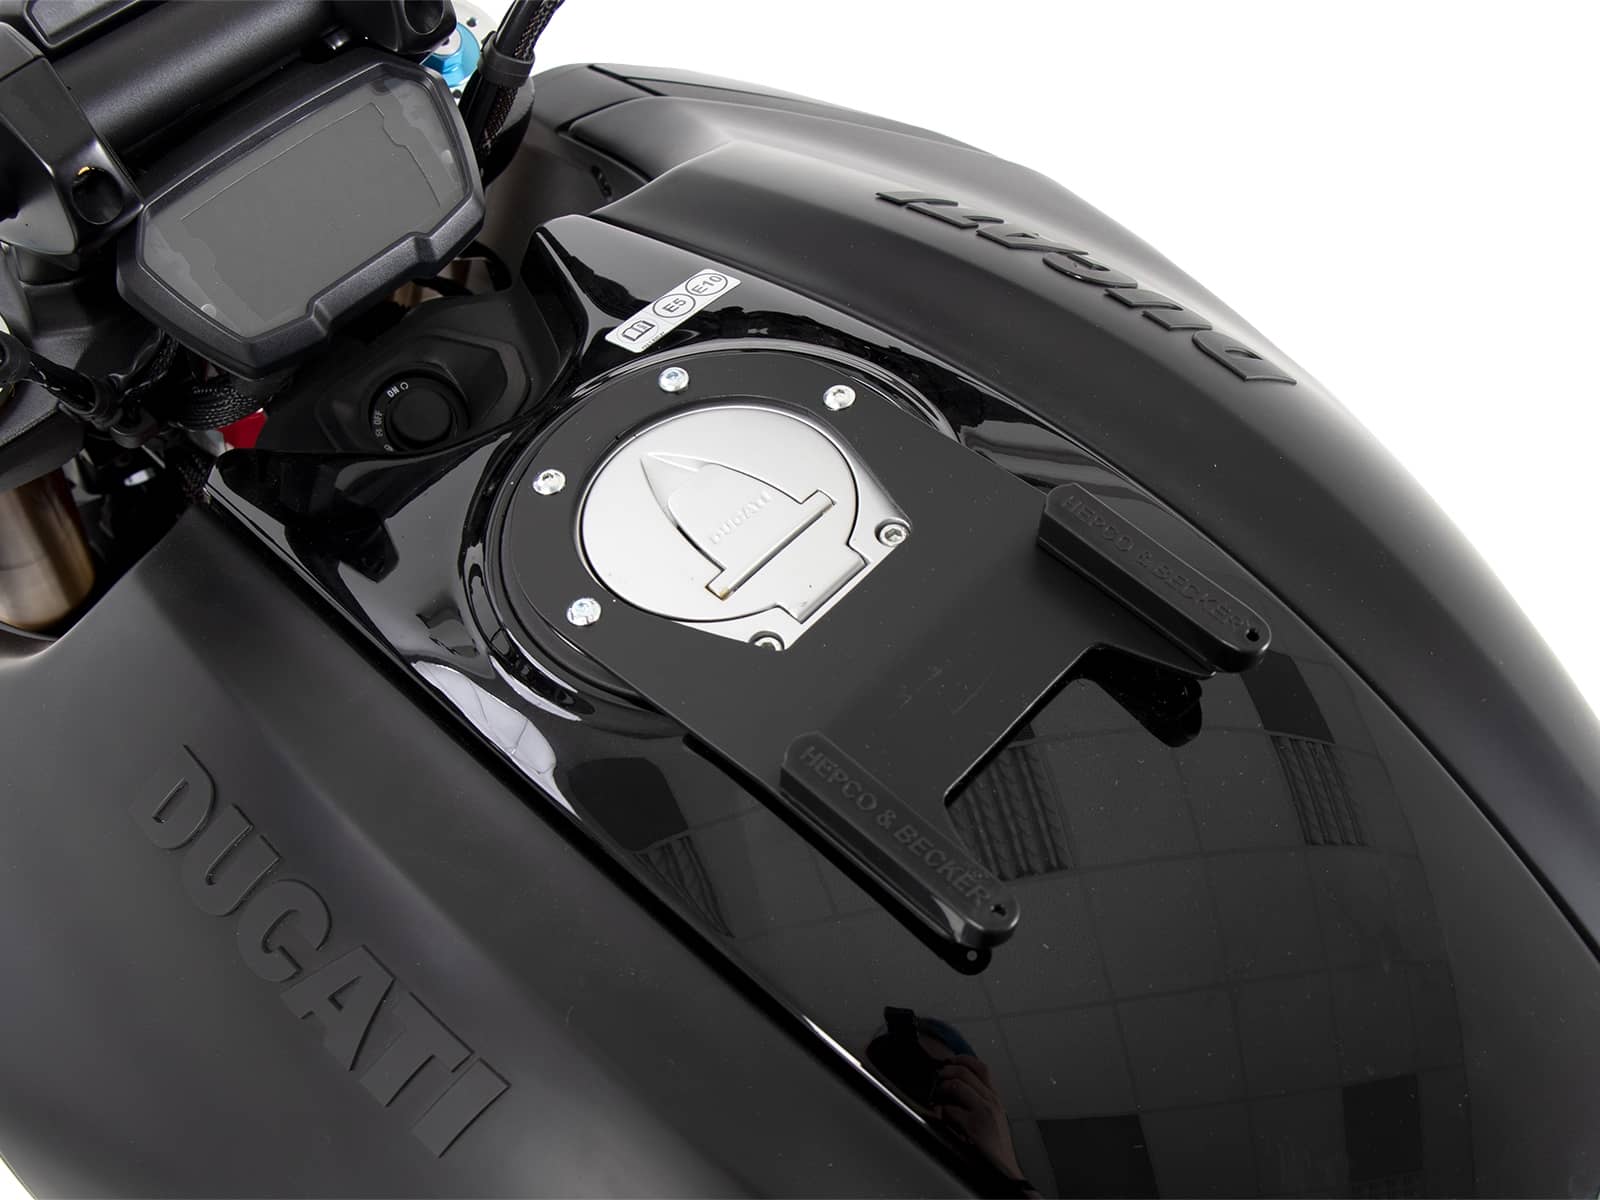 Tankring Lock-it inkl. Tankrucksackverschlusseinheit für Ducati Diavel 1260/S (2019-)